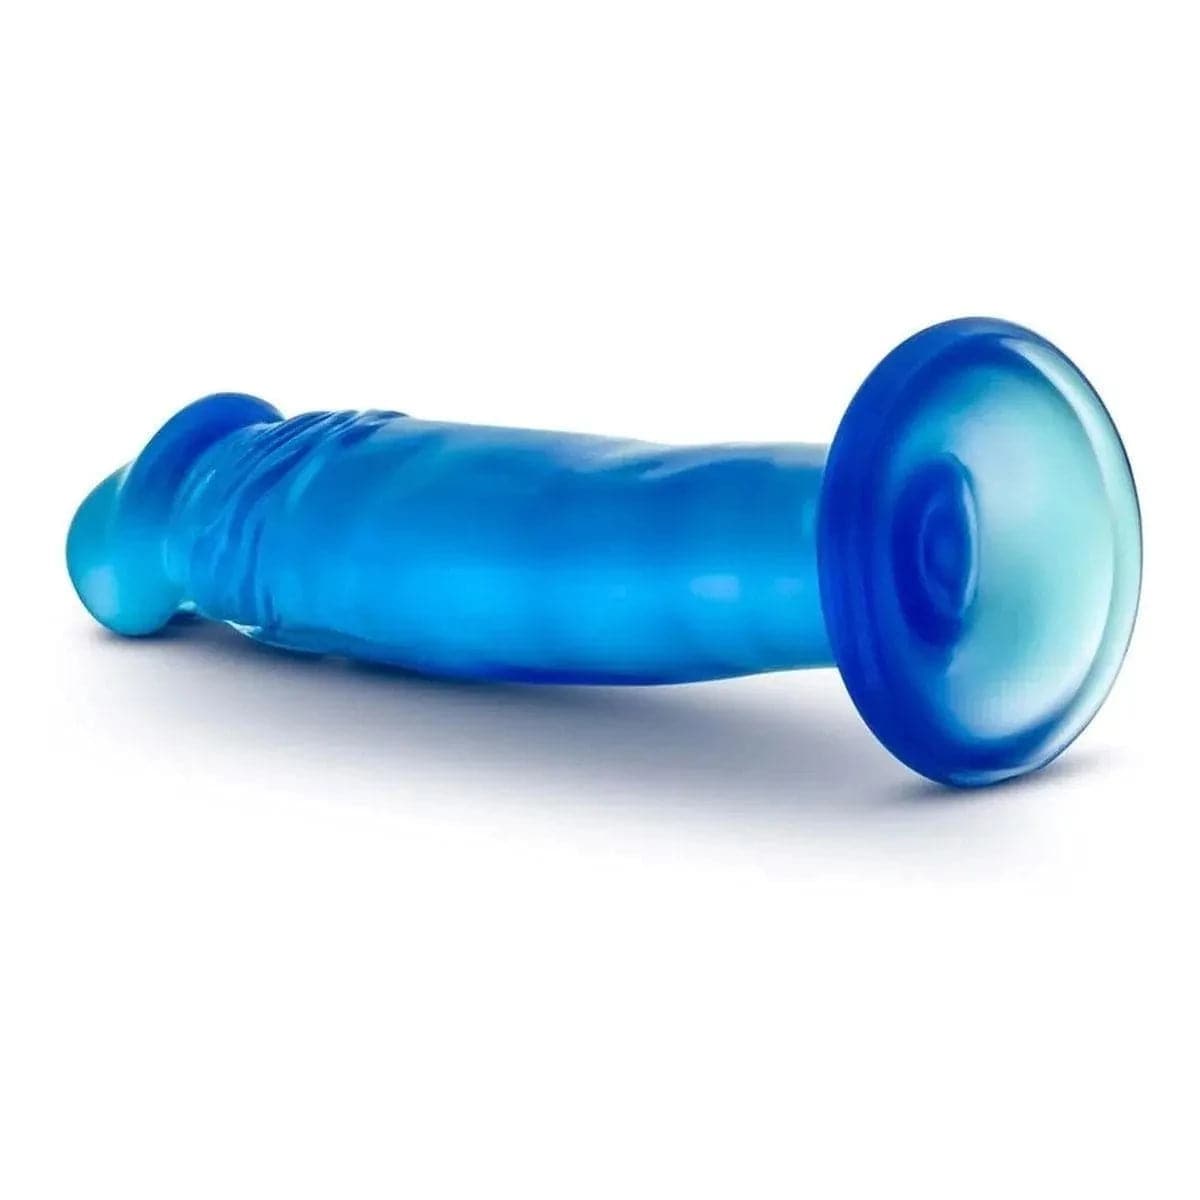 Dildo bYours Sweet n Small Azul, 17cm Ø3.3cm - Pérola SexShop